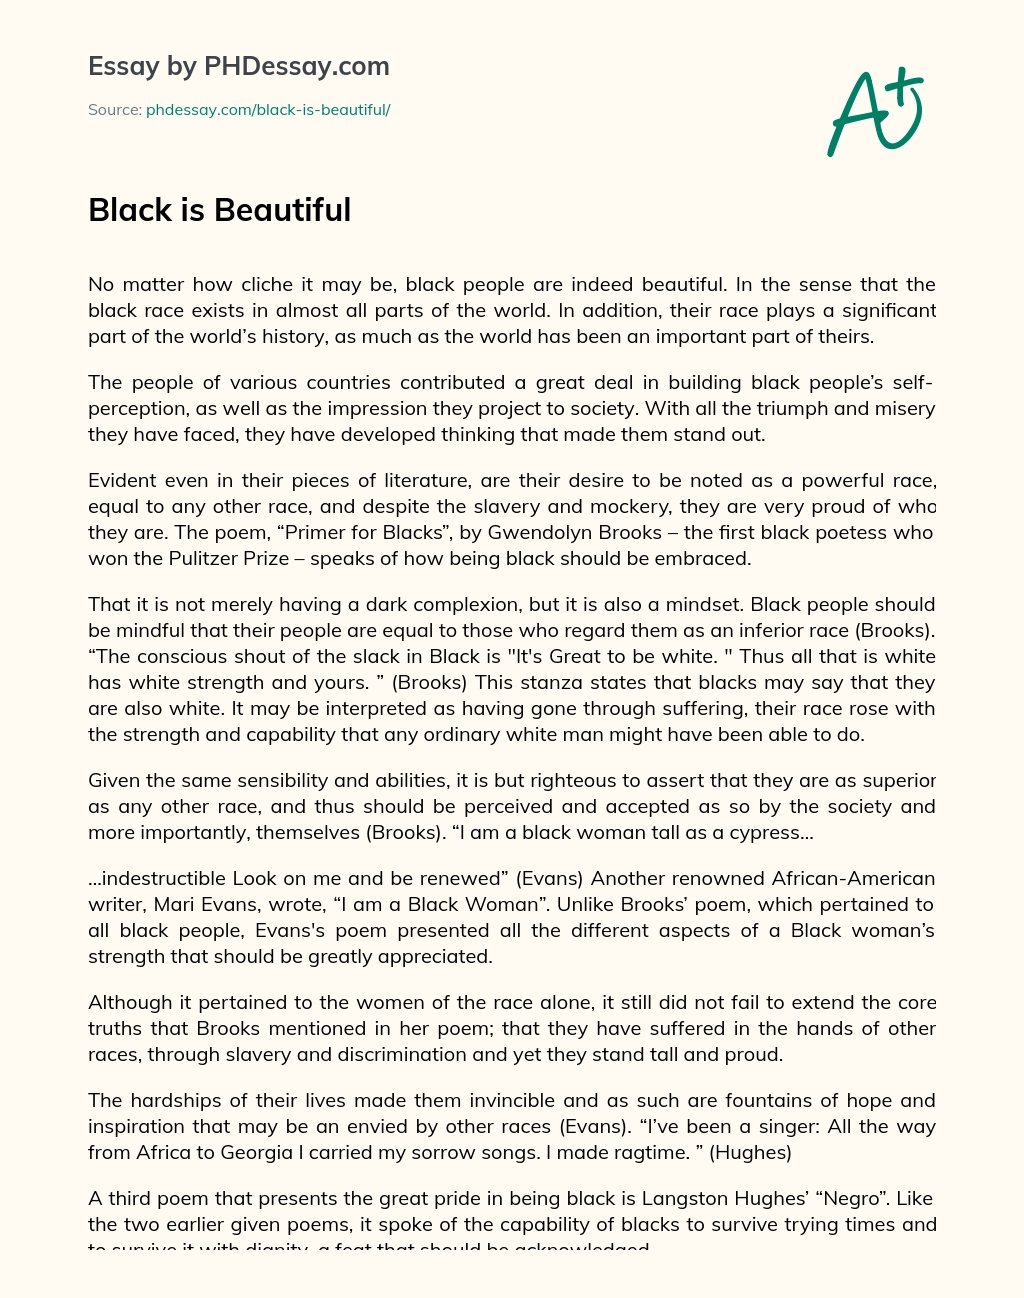 Black is Beautiful essay